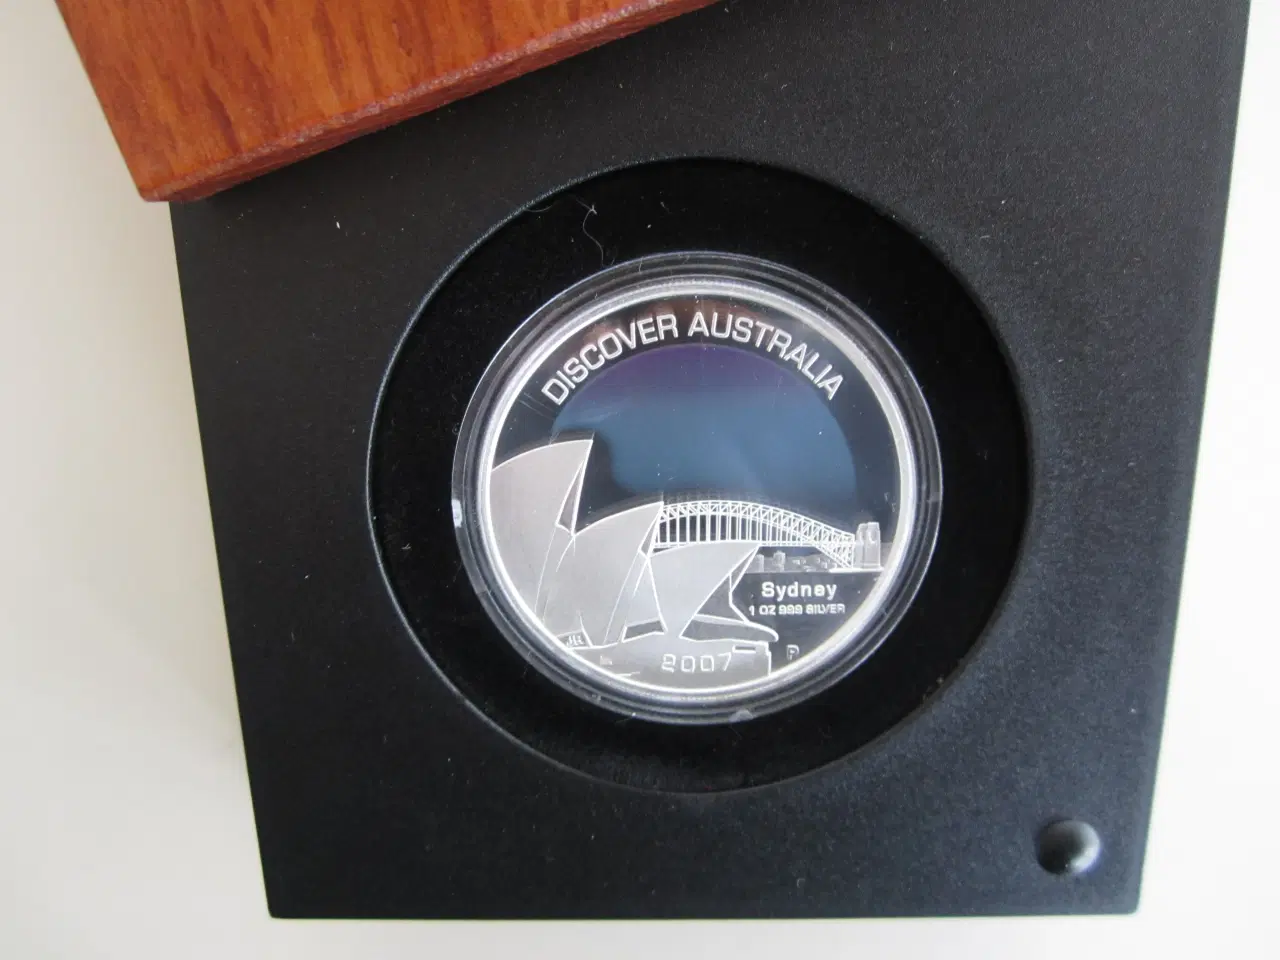 Billede 6 - Discover Australia "Sydney" 2007 sølvmønt.